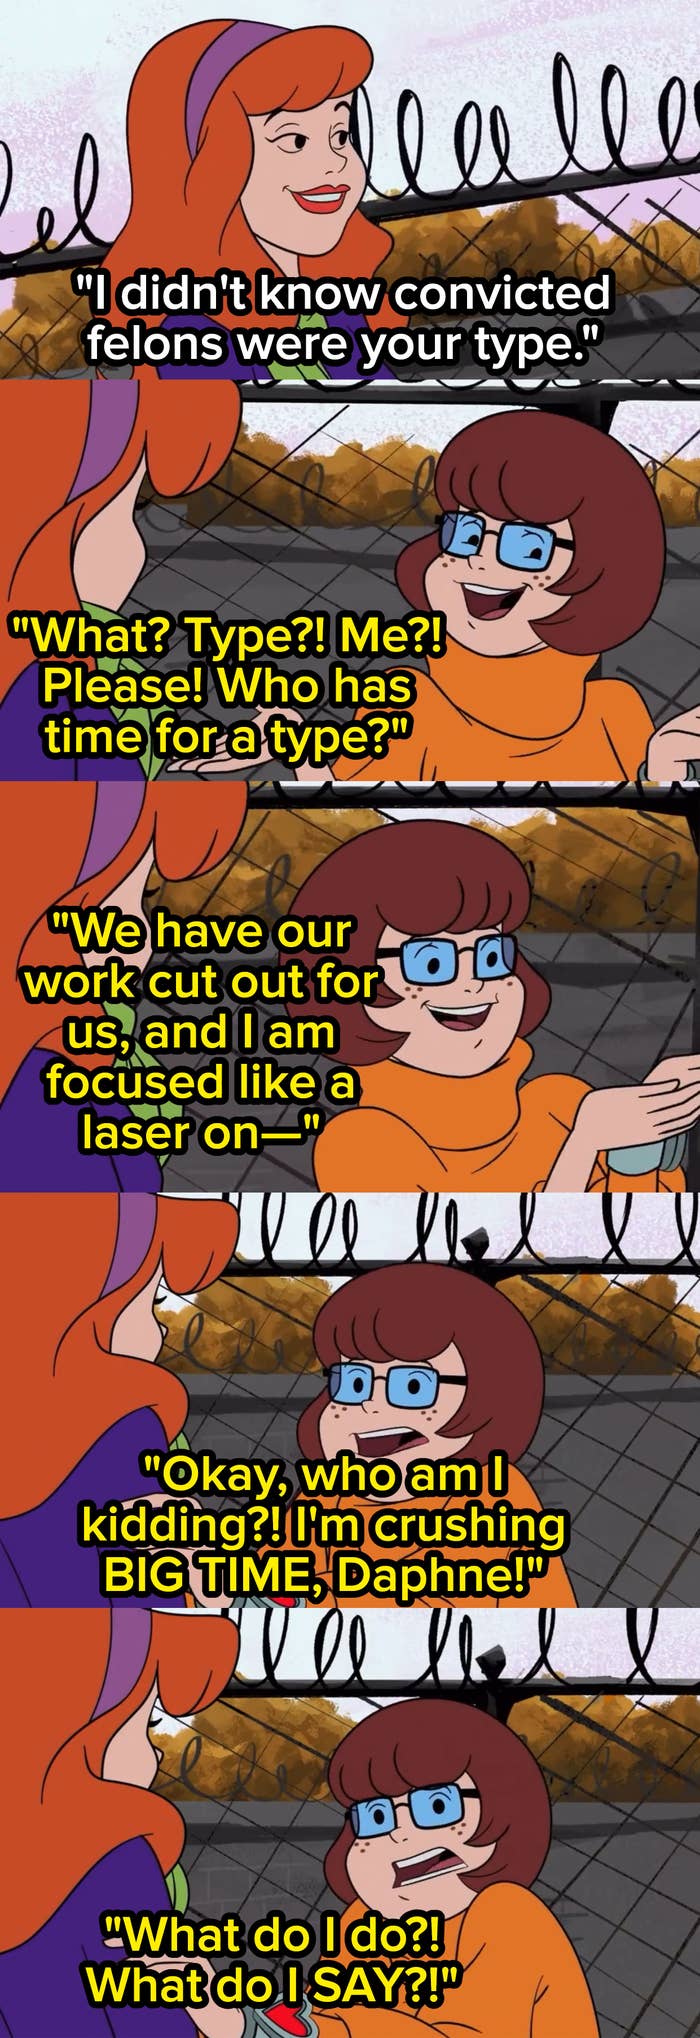 Velma admitting to Daphne that&#x27;s crushing hard on a convicted felon